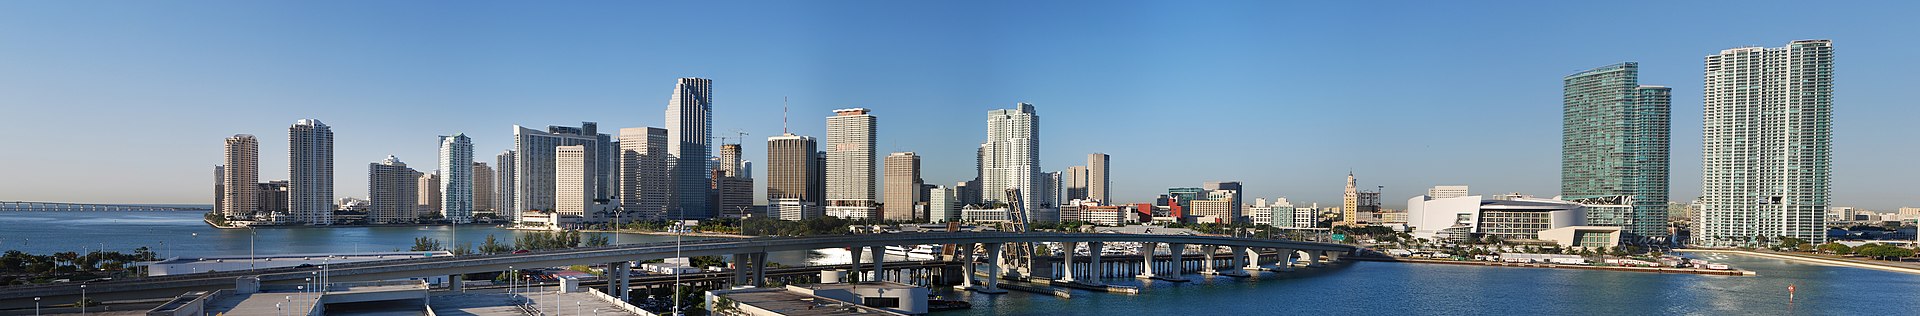 Miami, az amerikai riviéra